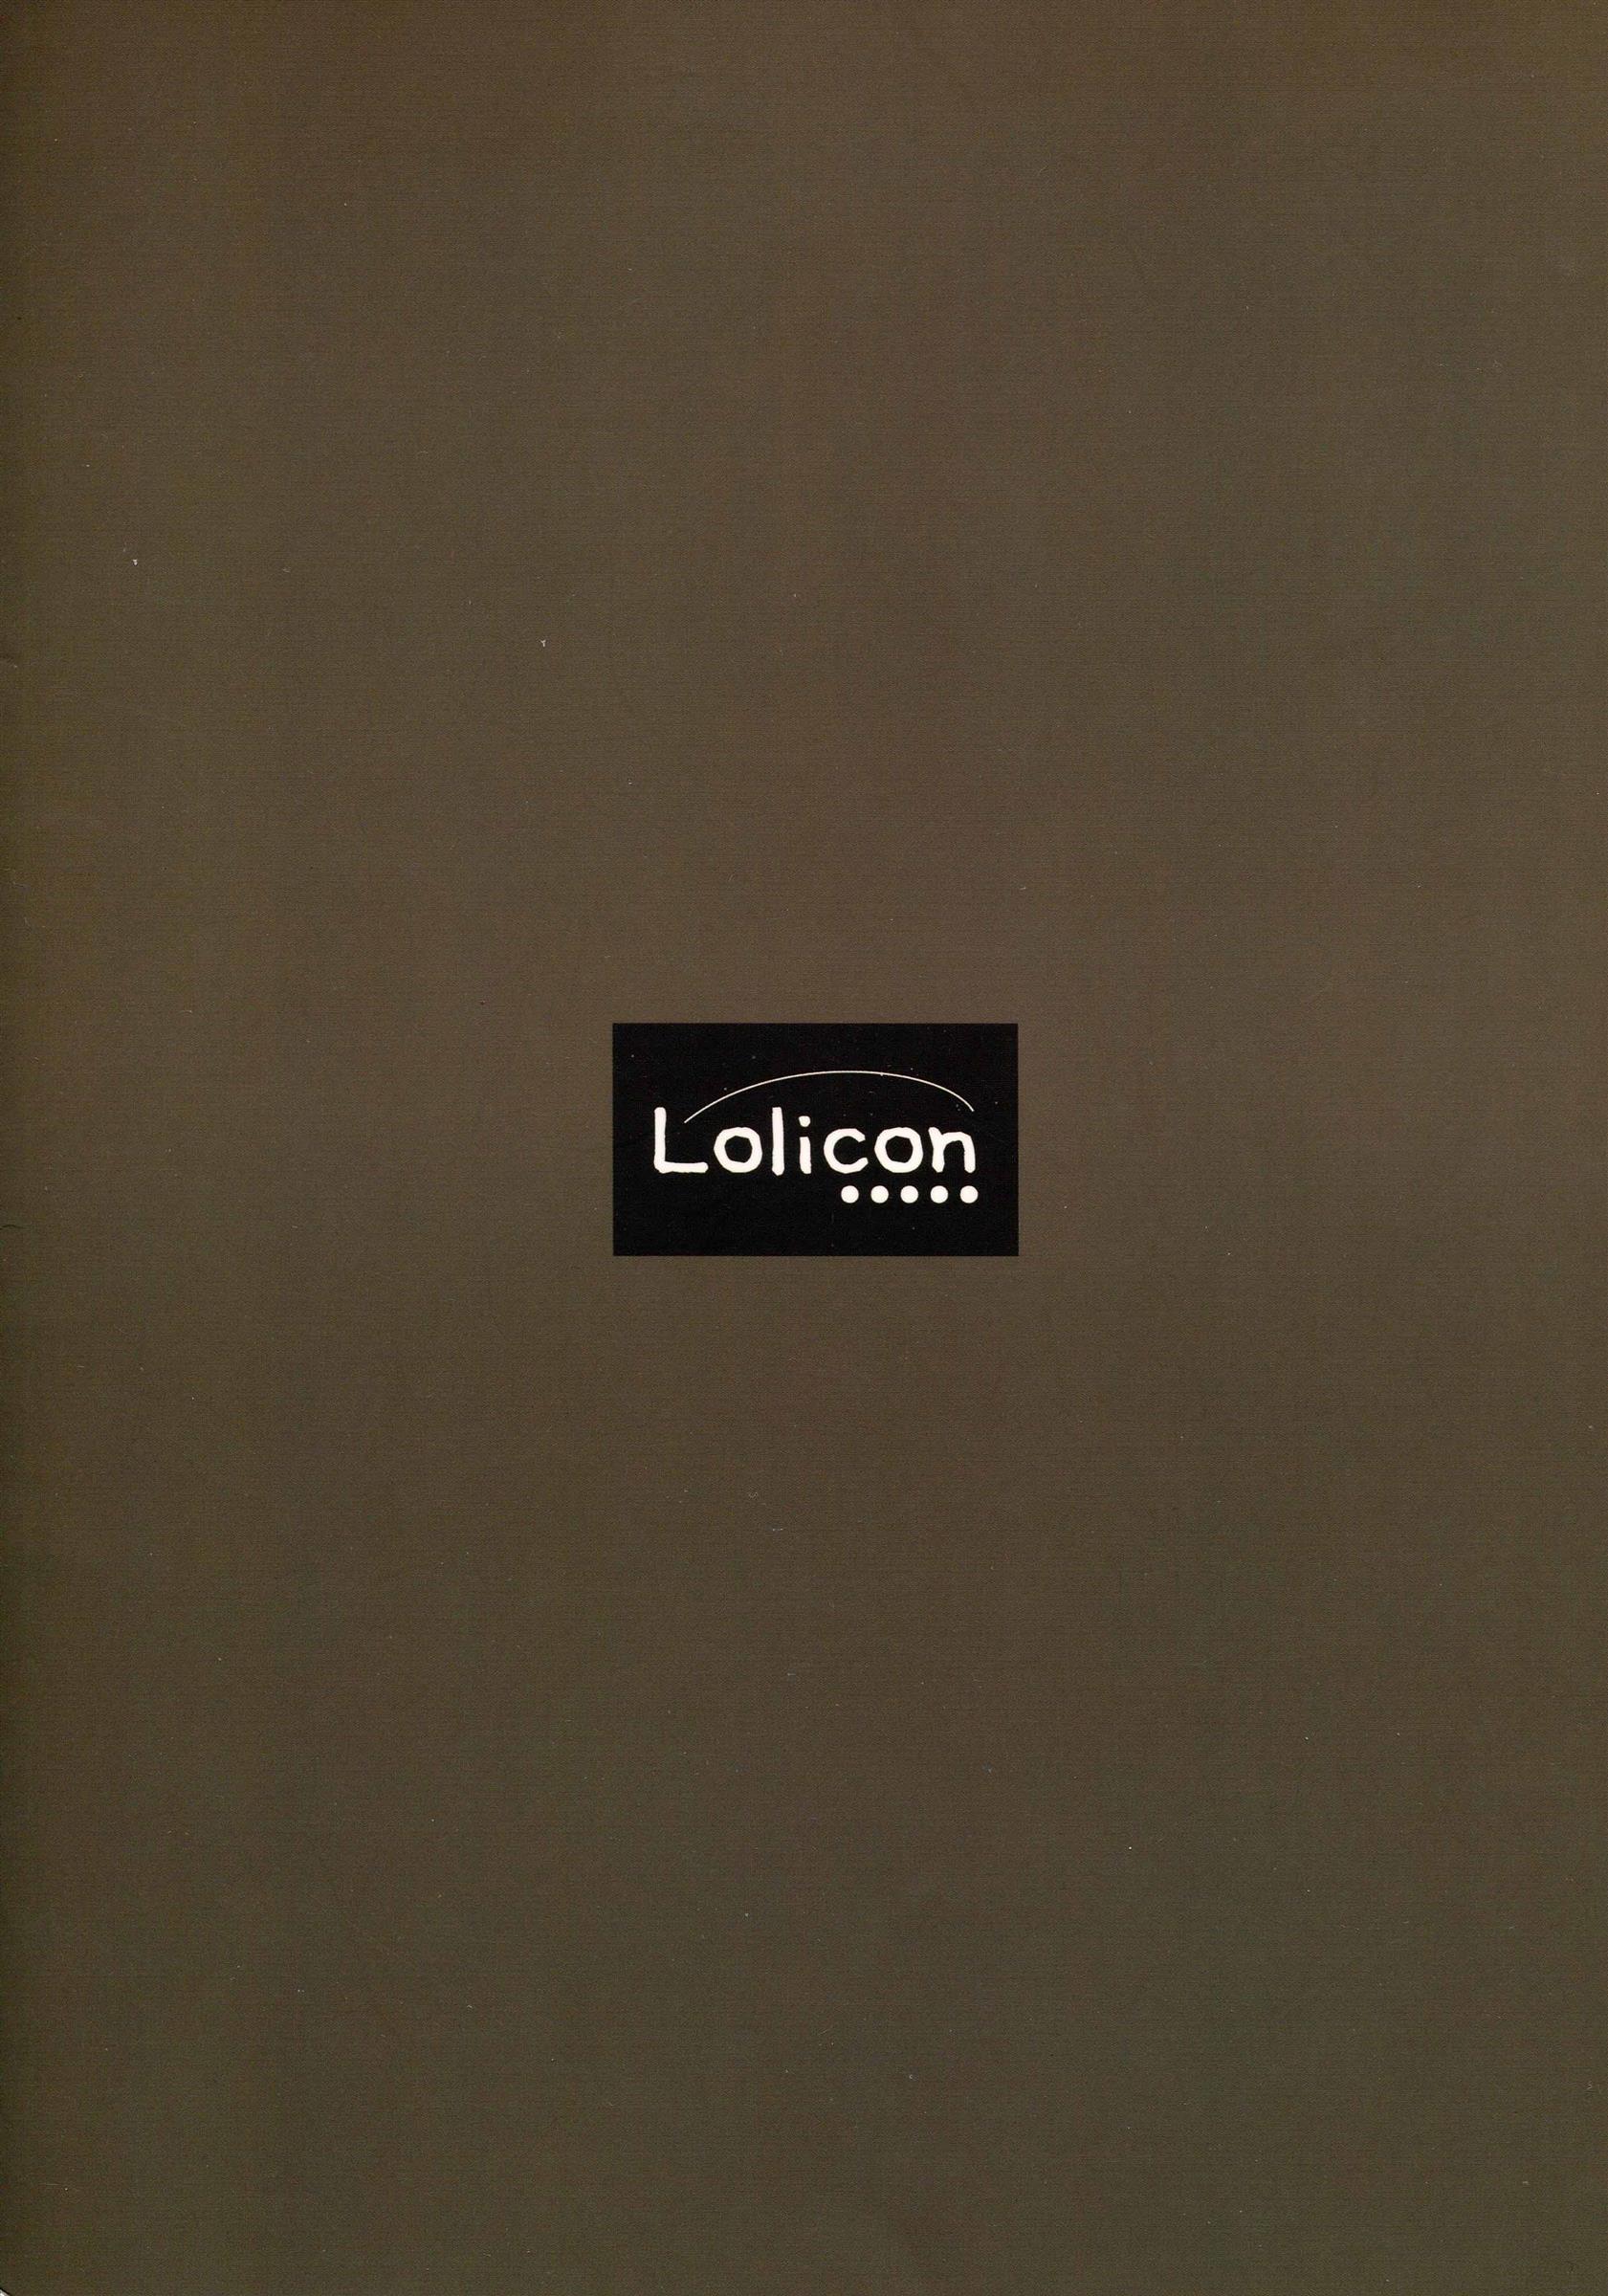 Lolicon Special 2